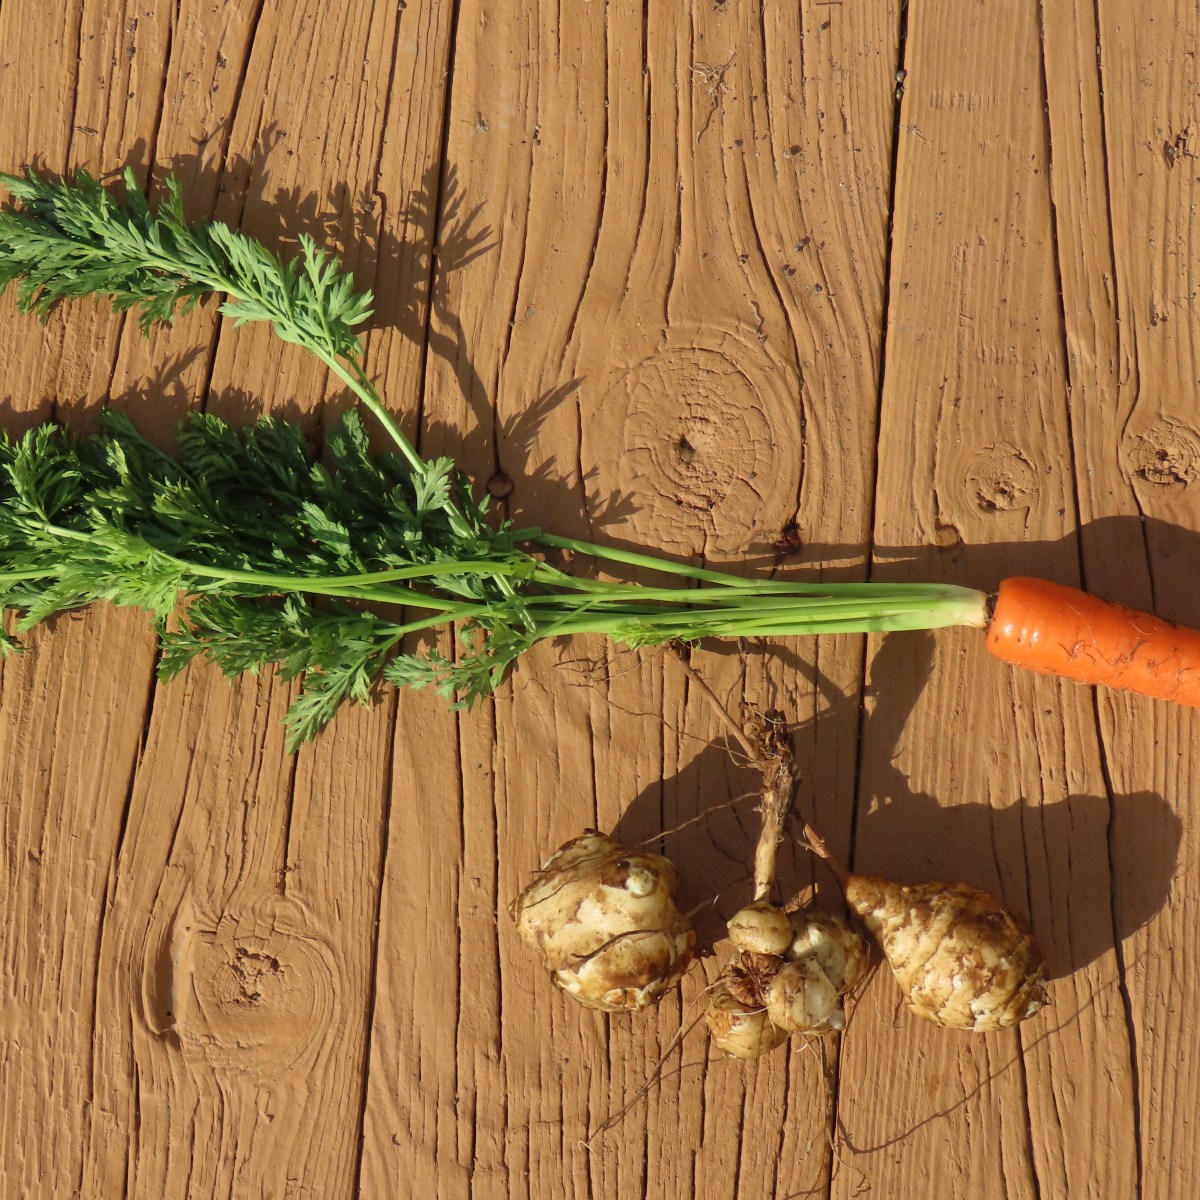 carrot and Jerusalem artichoke tuber